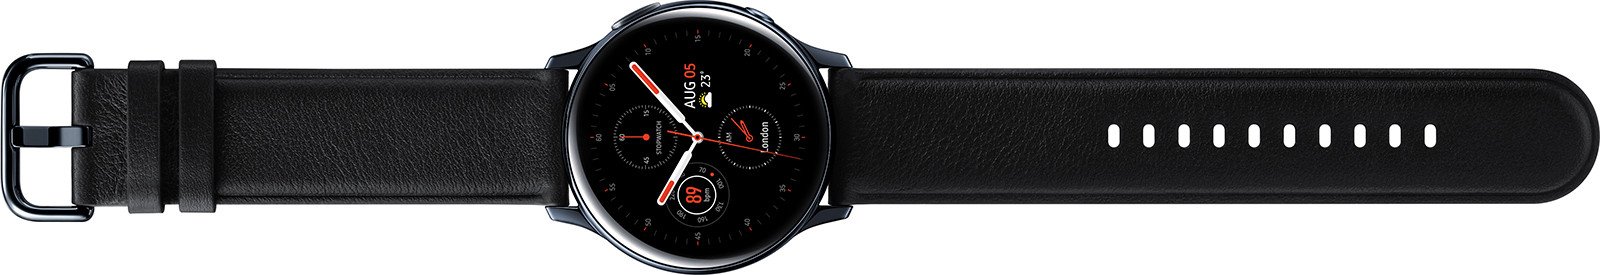 Смарт годинник Samsung Galaxy Watch Active 2 R830 40mm - Stainless steel Black (SM-R830NSKASEK)